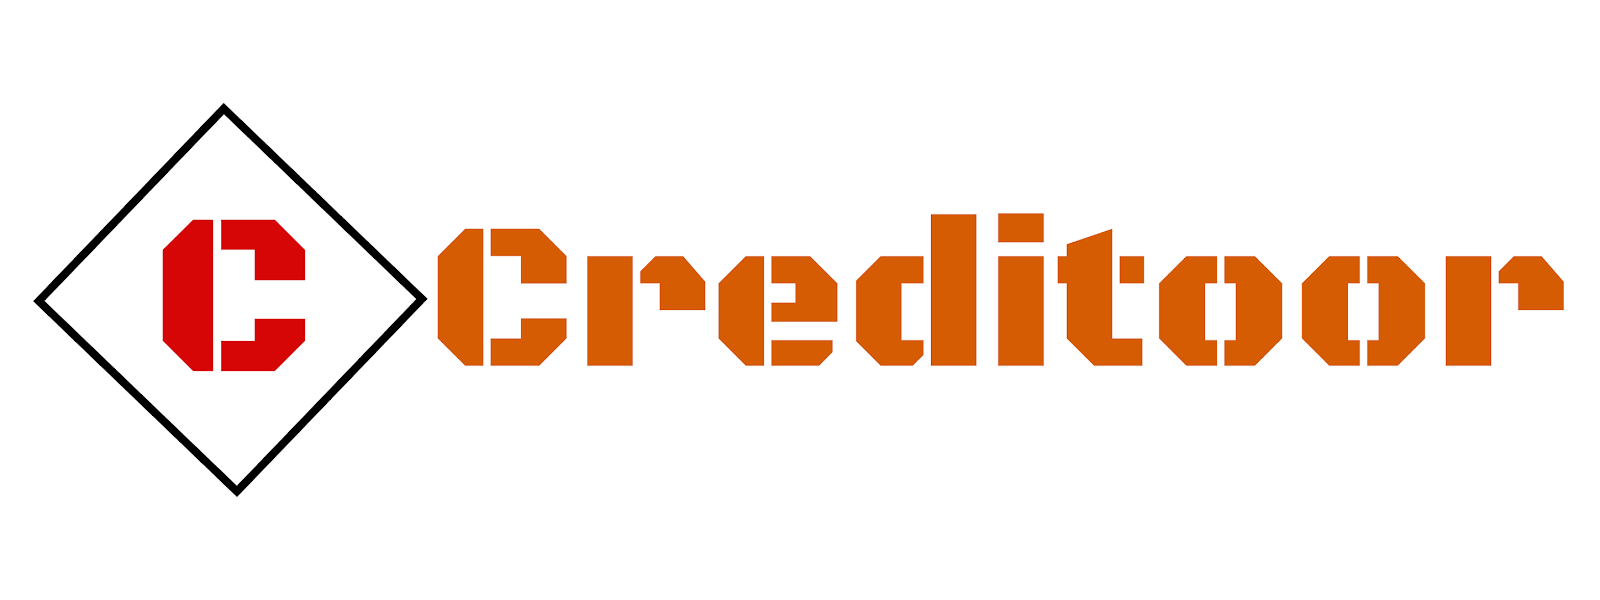 Creditoor